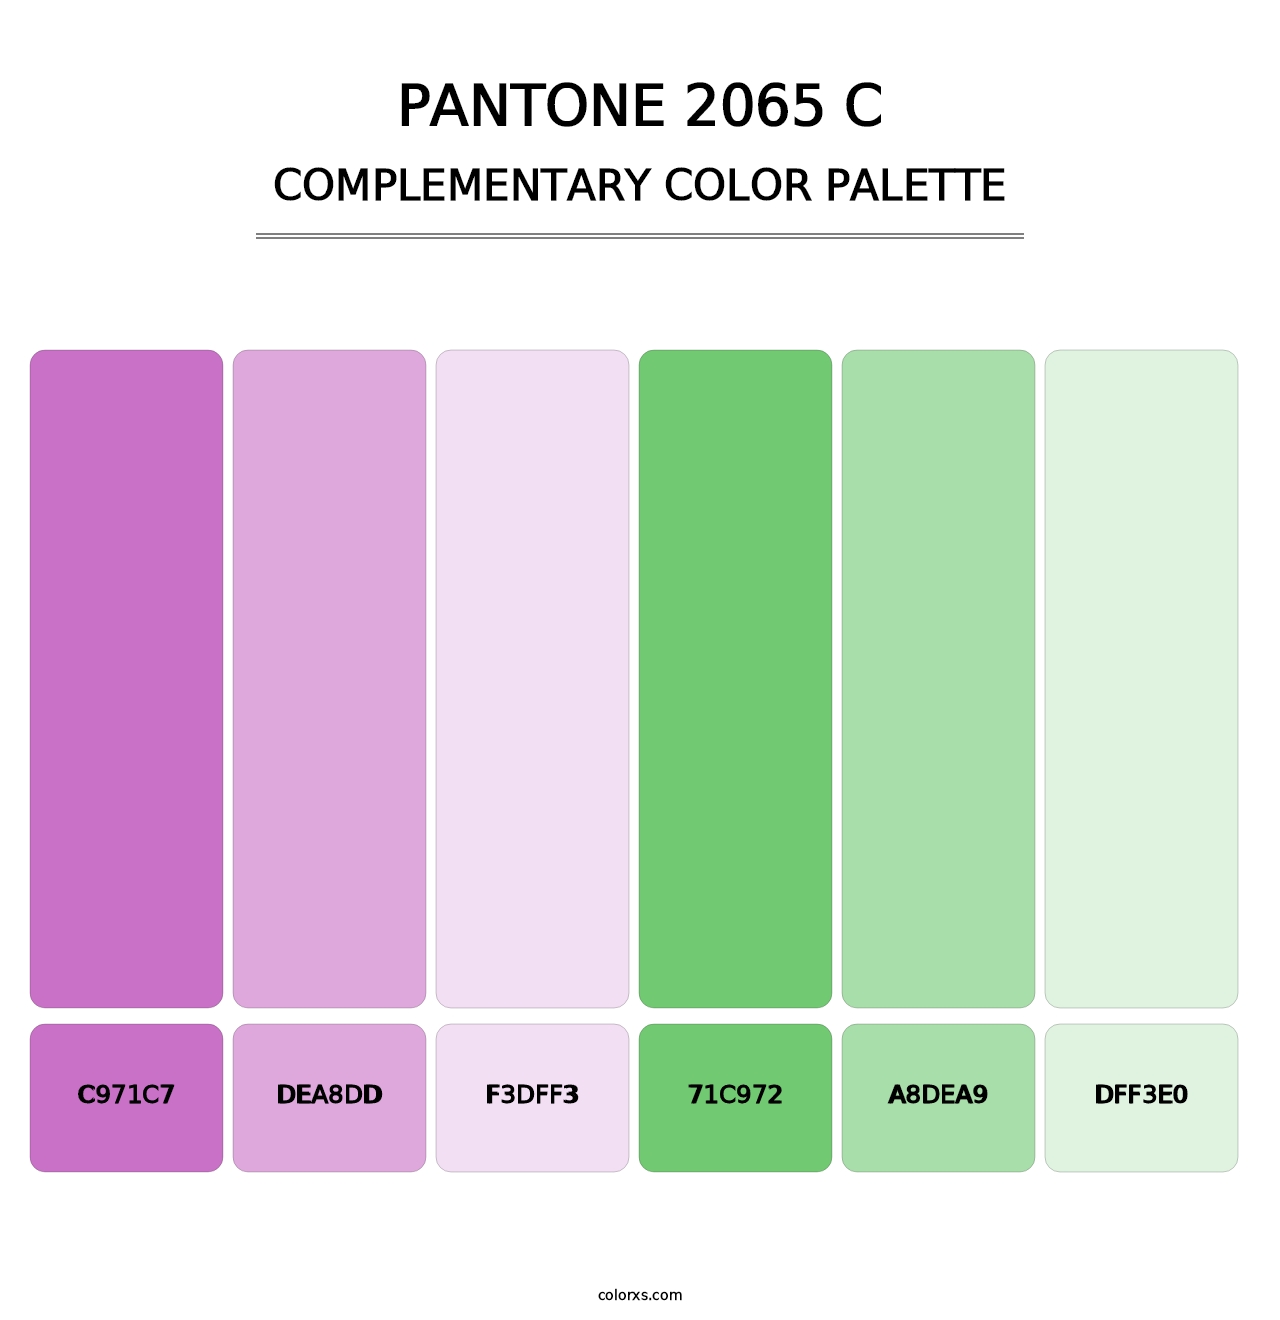 PANTONE 2065 C - Complementary Color Palette